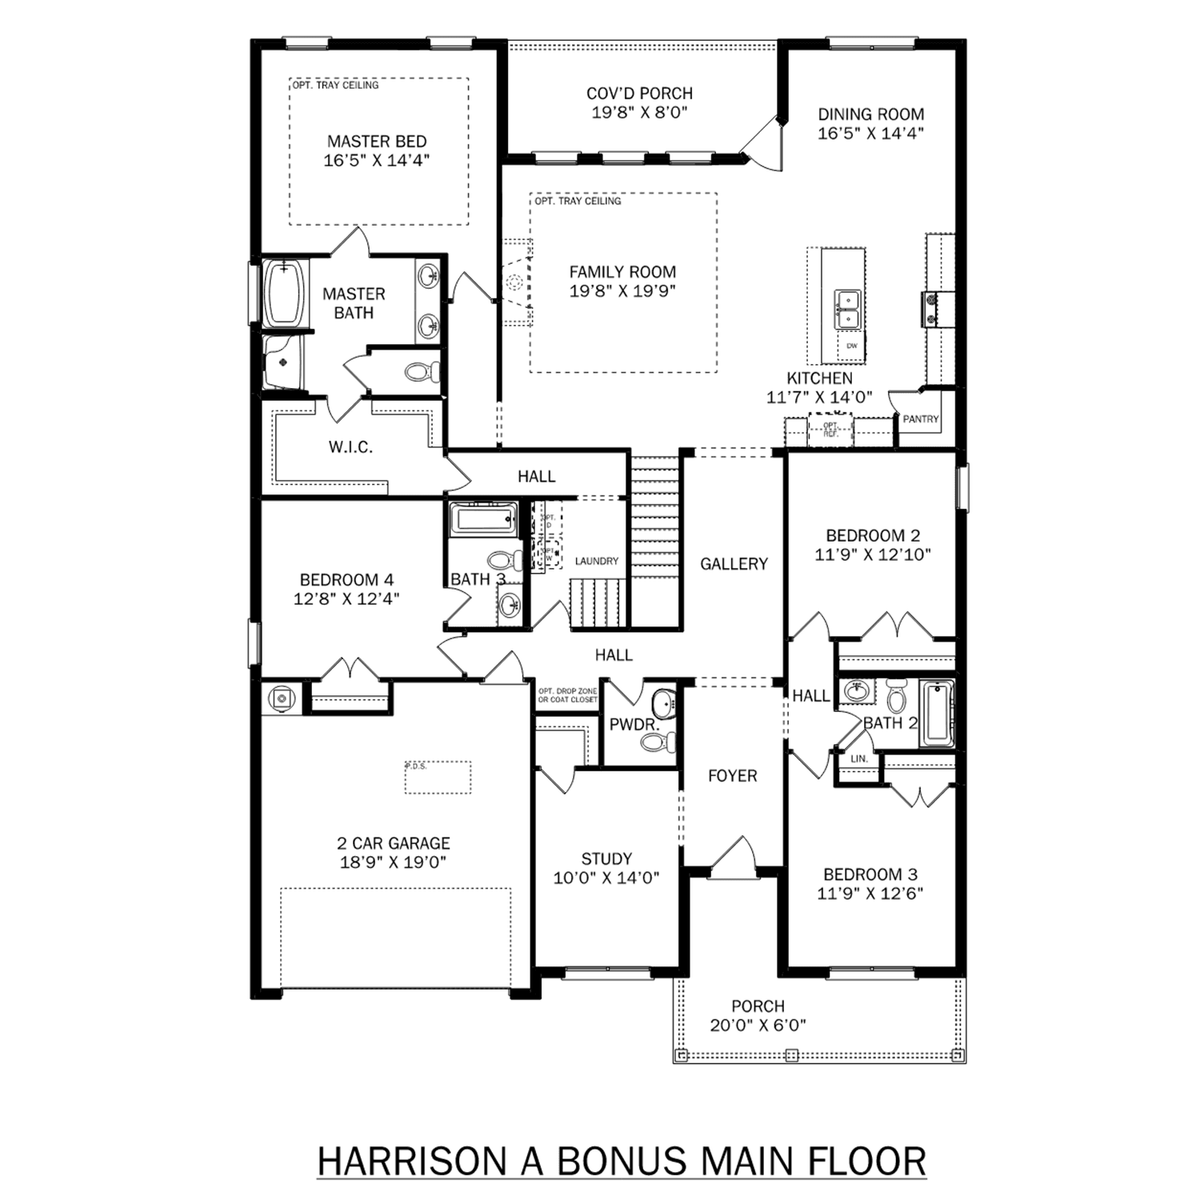 1 - The Harrison with Bonus buildable floor plan layout in Davidson Homes' Barnett's Crossing community.